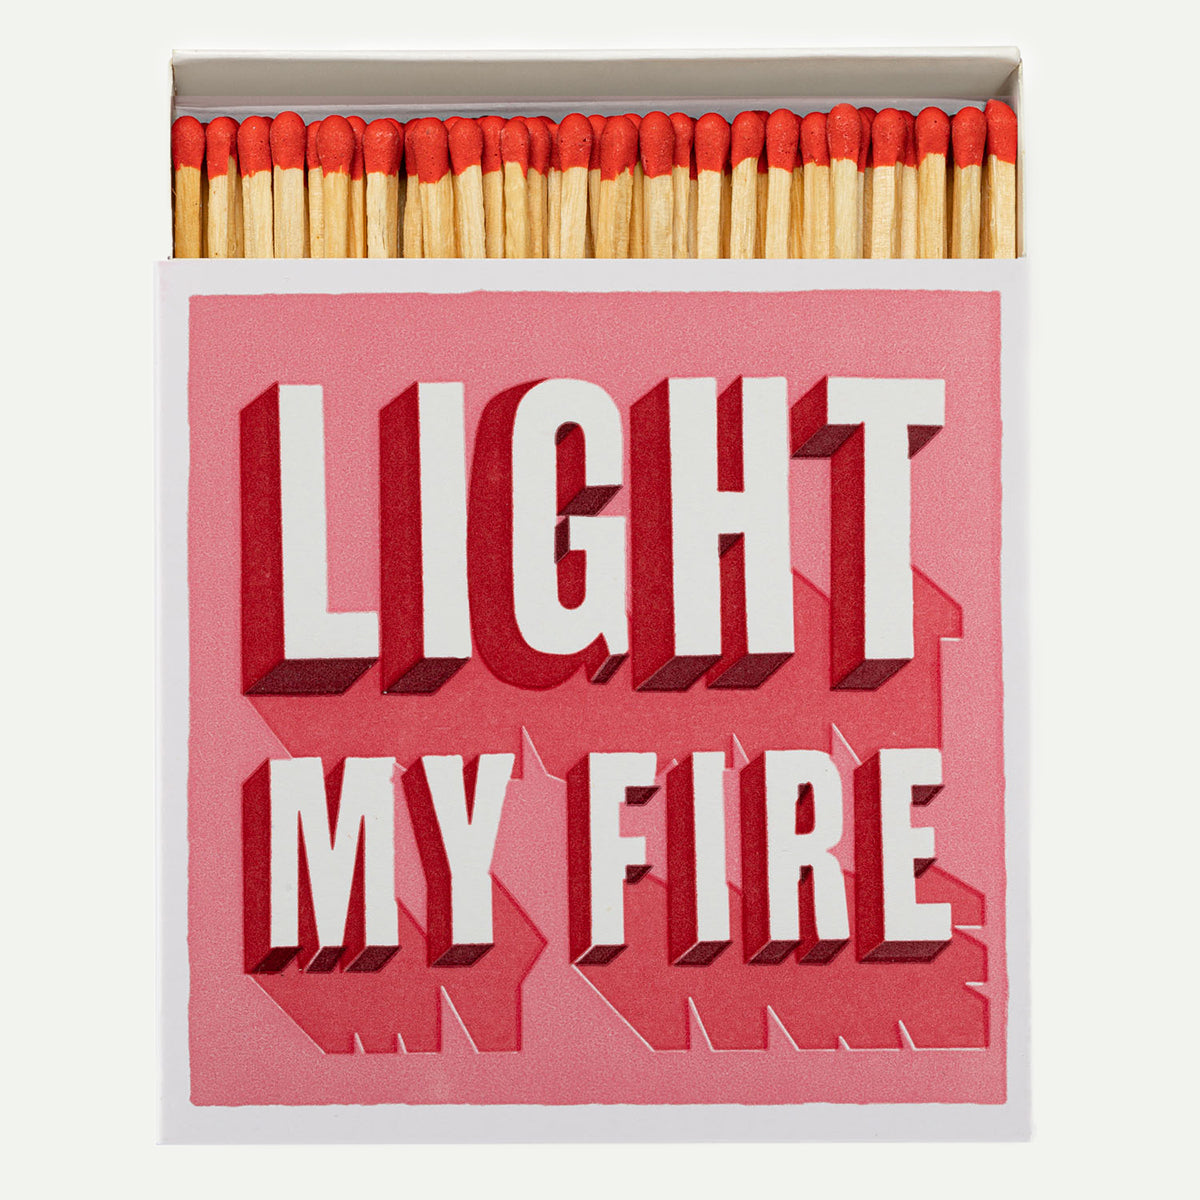 Archivist Light My Fire Safety Matches